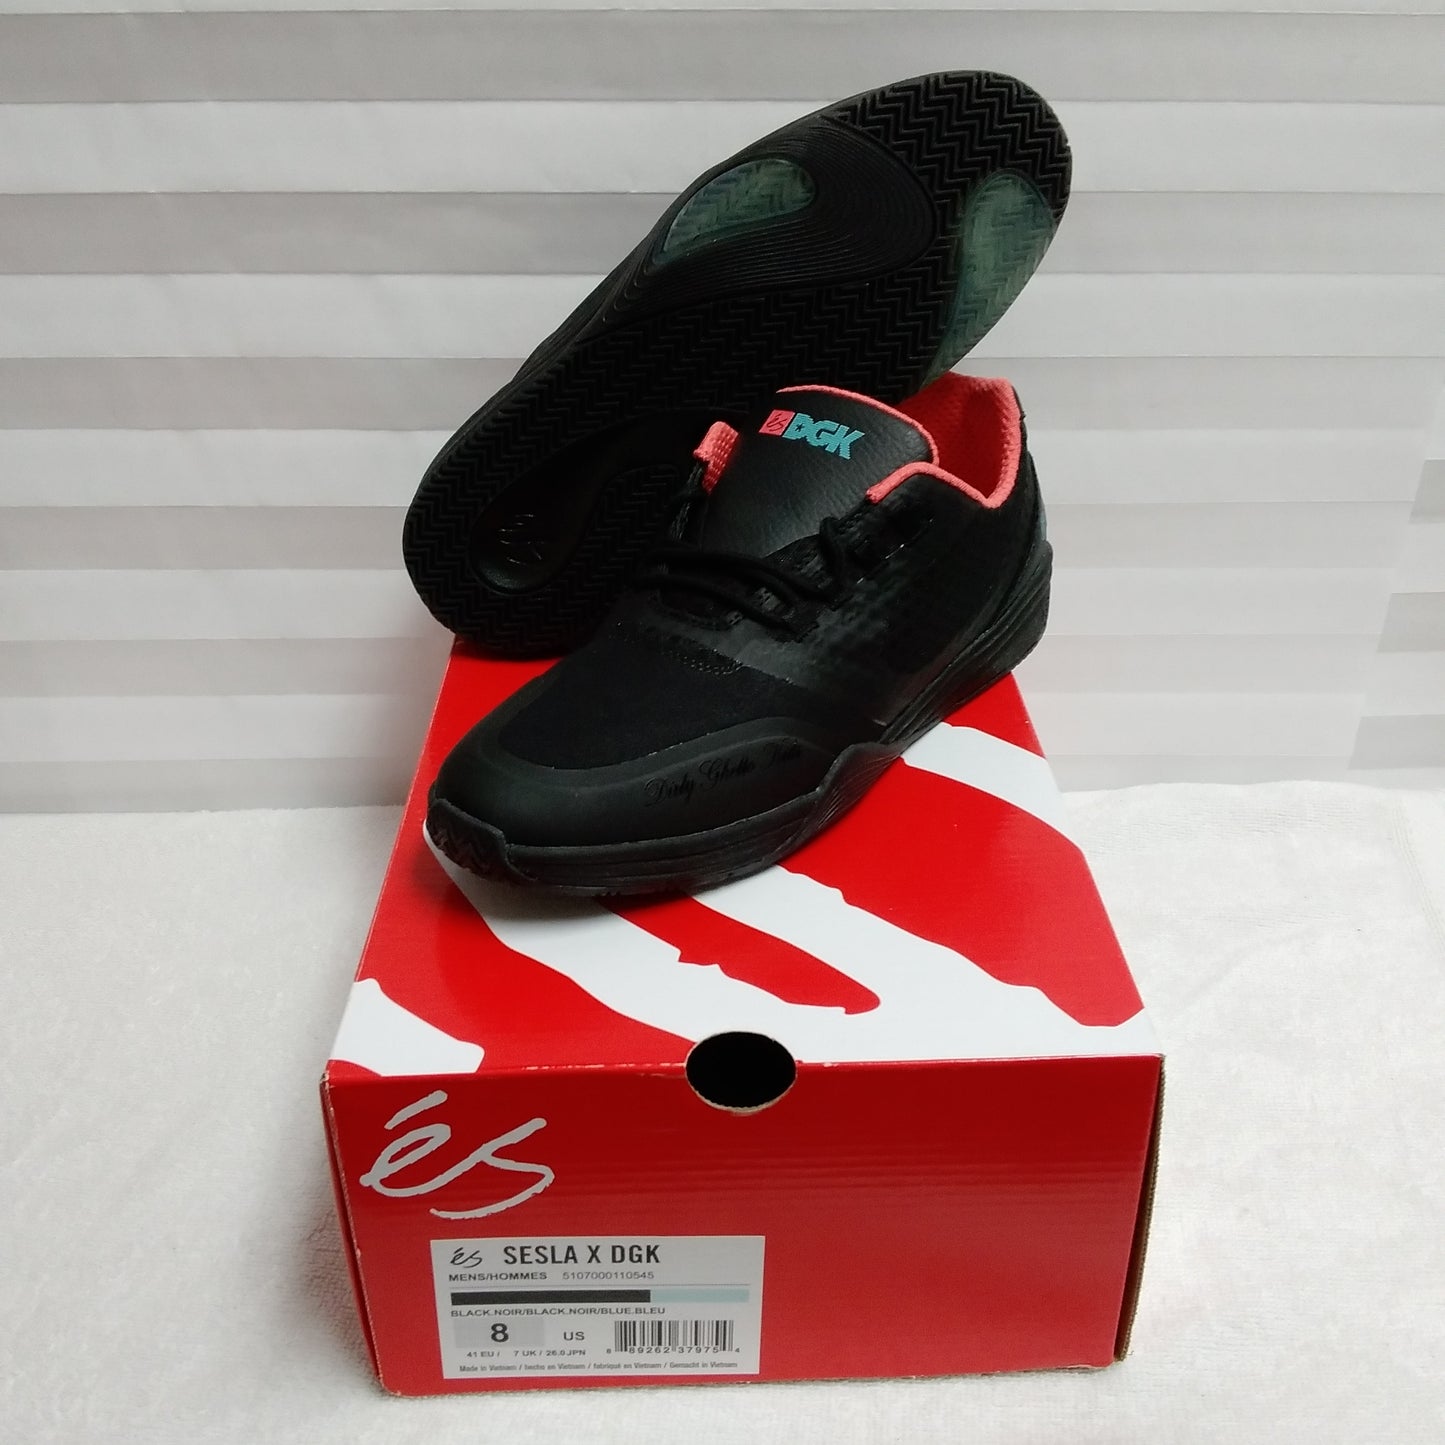 NIB - Es Men's Black SESLA X DGK Skateboarding Shoes - Size: 8